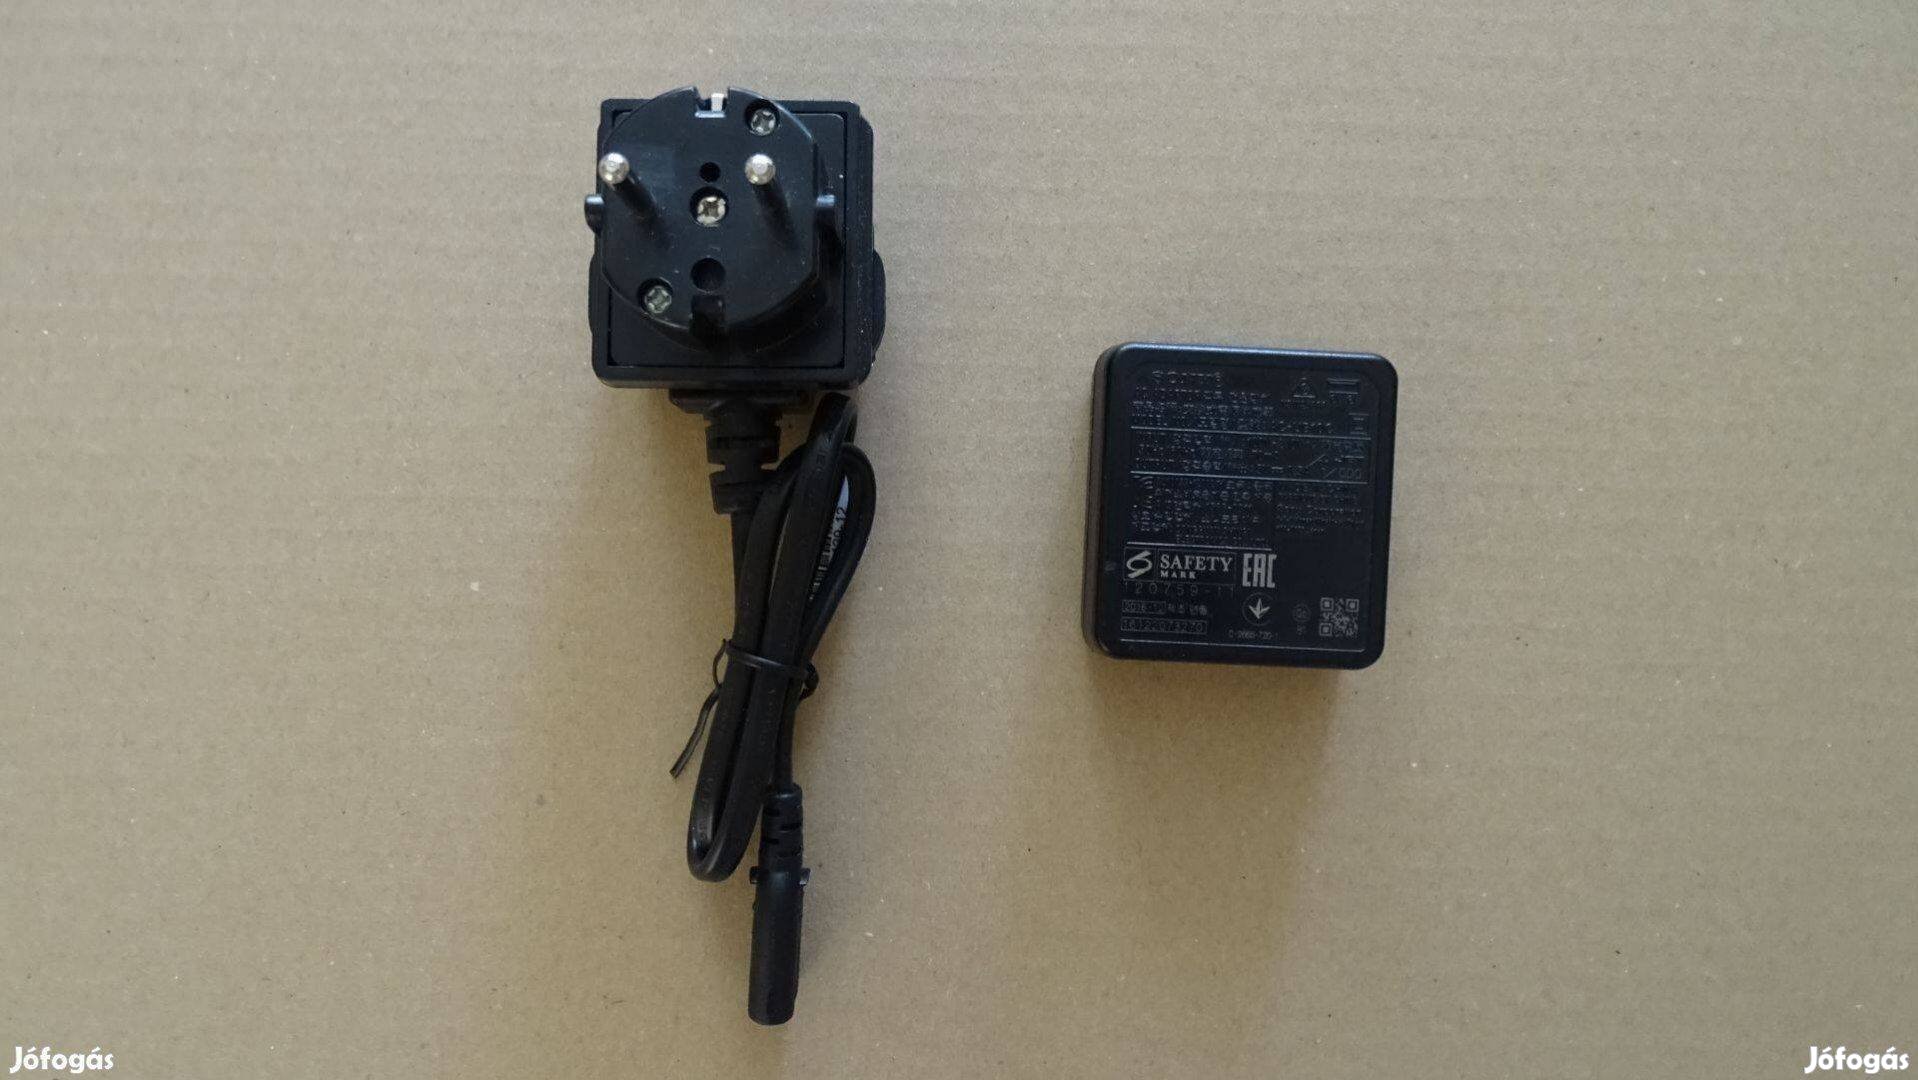 Sony AC-UB10C adapter